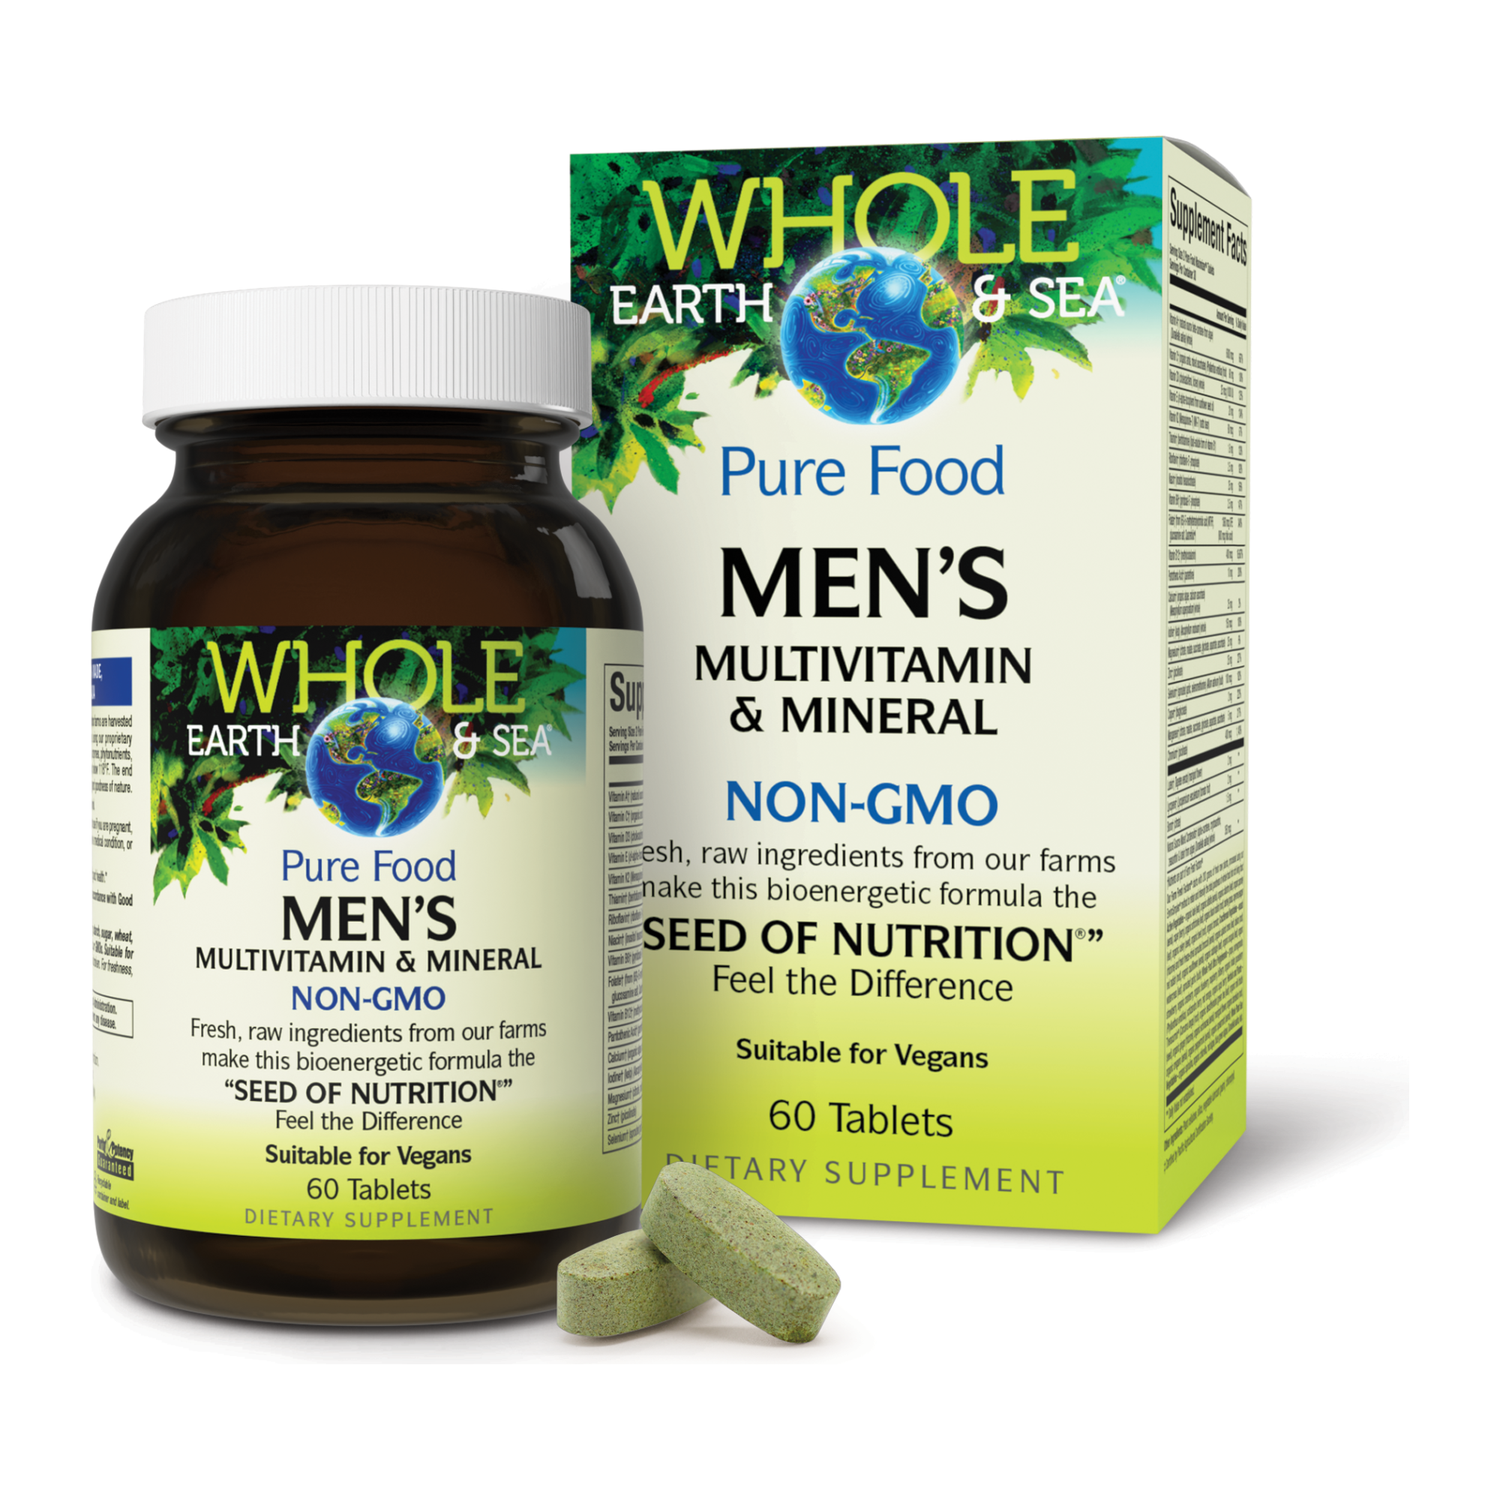 Men's Multivitamin & Mineral for Whole Earth & Sea® |variant|hi-res|35504U